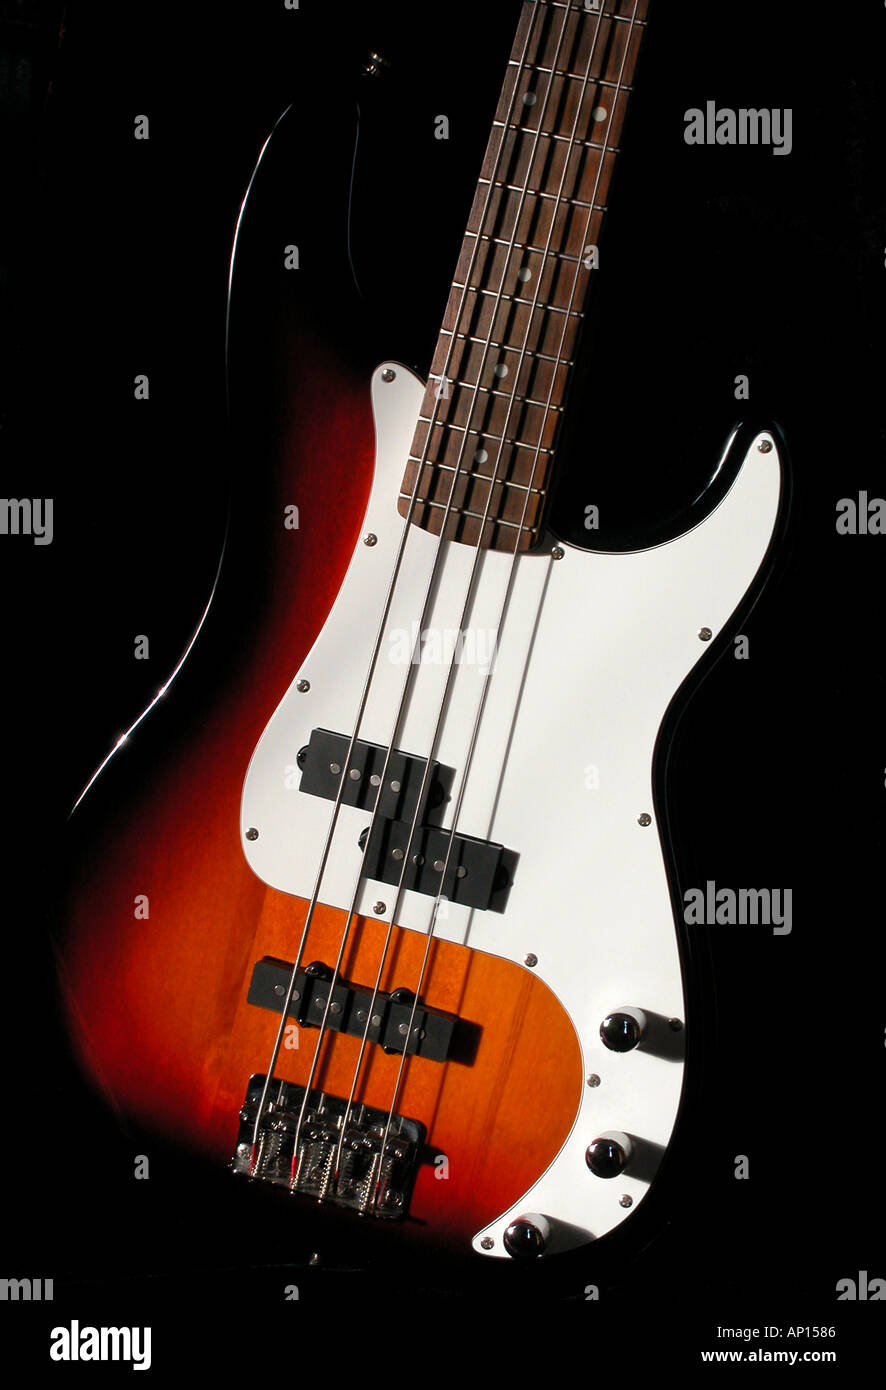 Fender Squier Jazz Bass cuerpo, secuencia 4 Sunburst, 2 single coil pickups, diapasón de palisandro, pickguard blanco Foto de stock